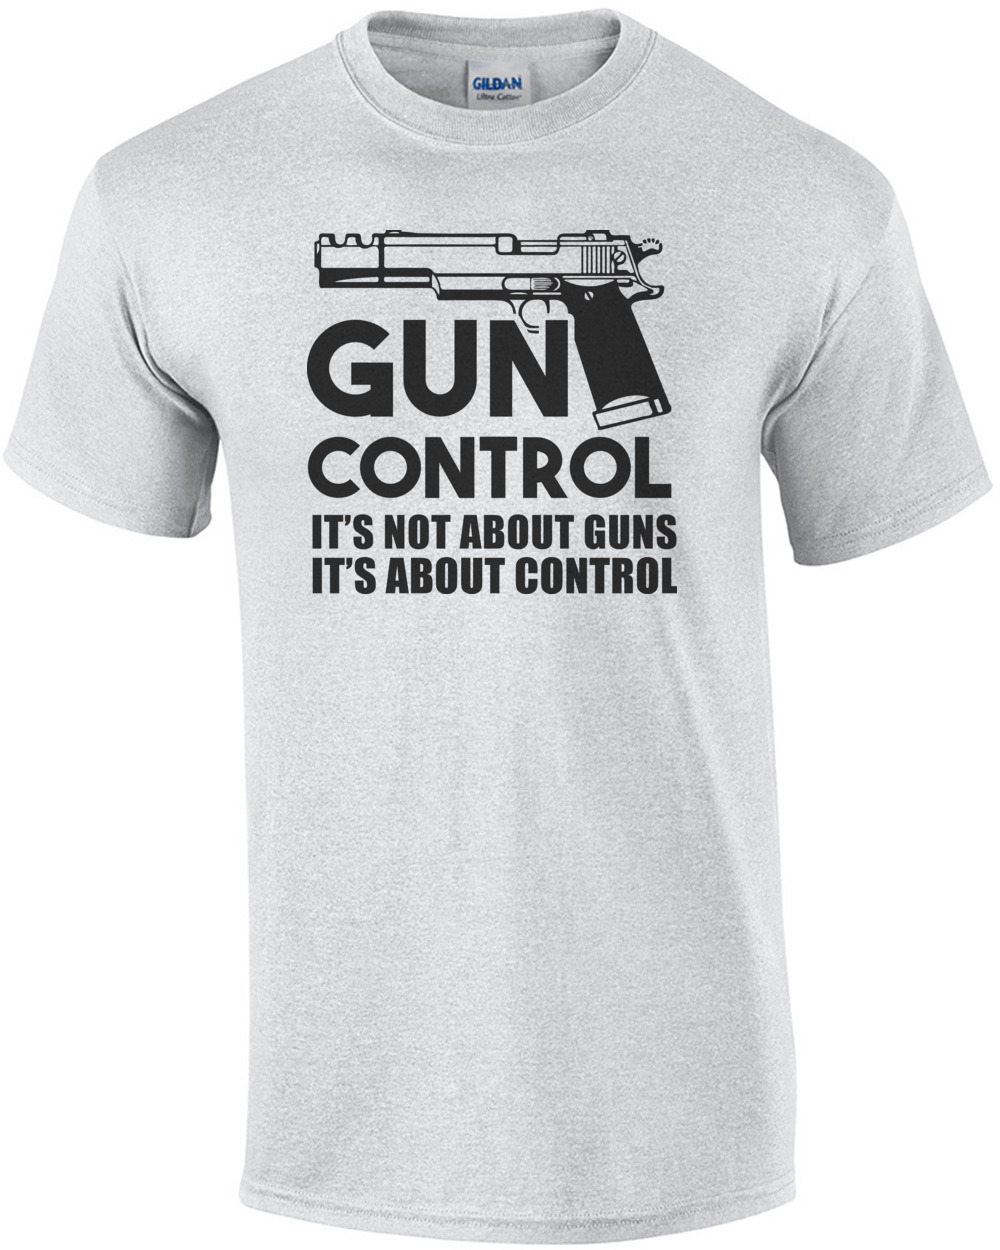 funny pro gun t shirts